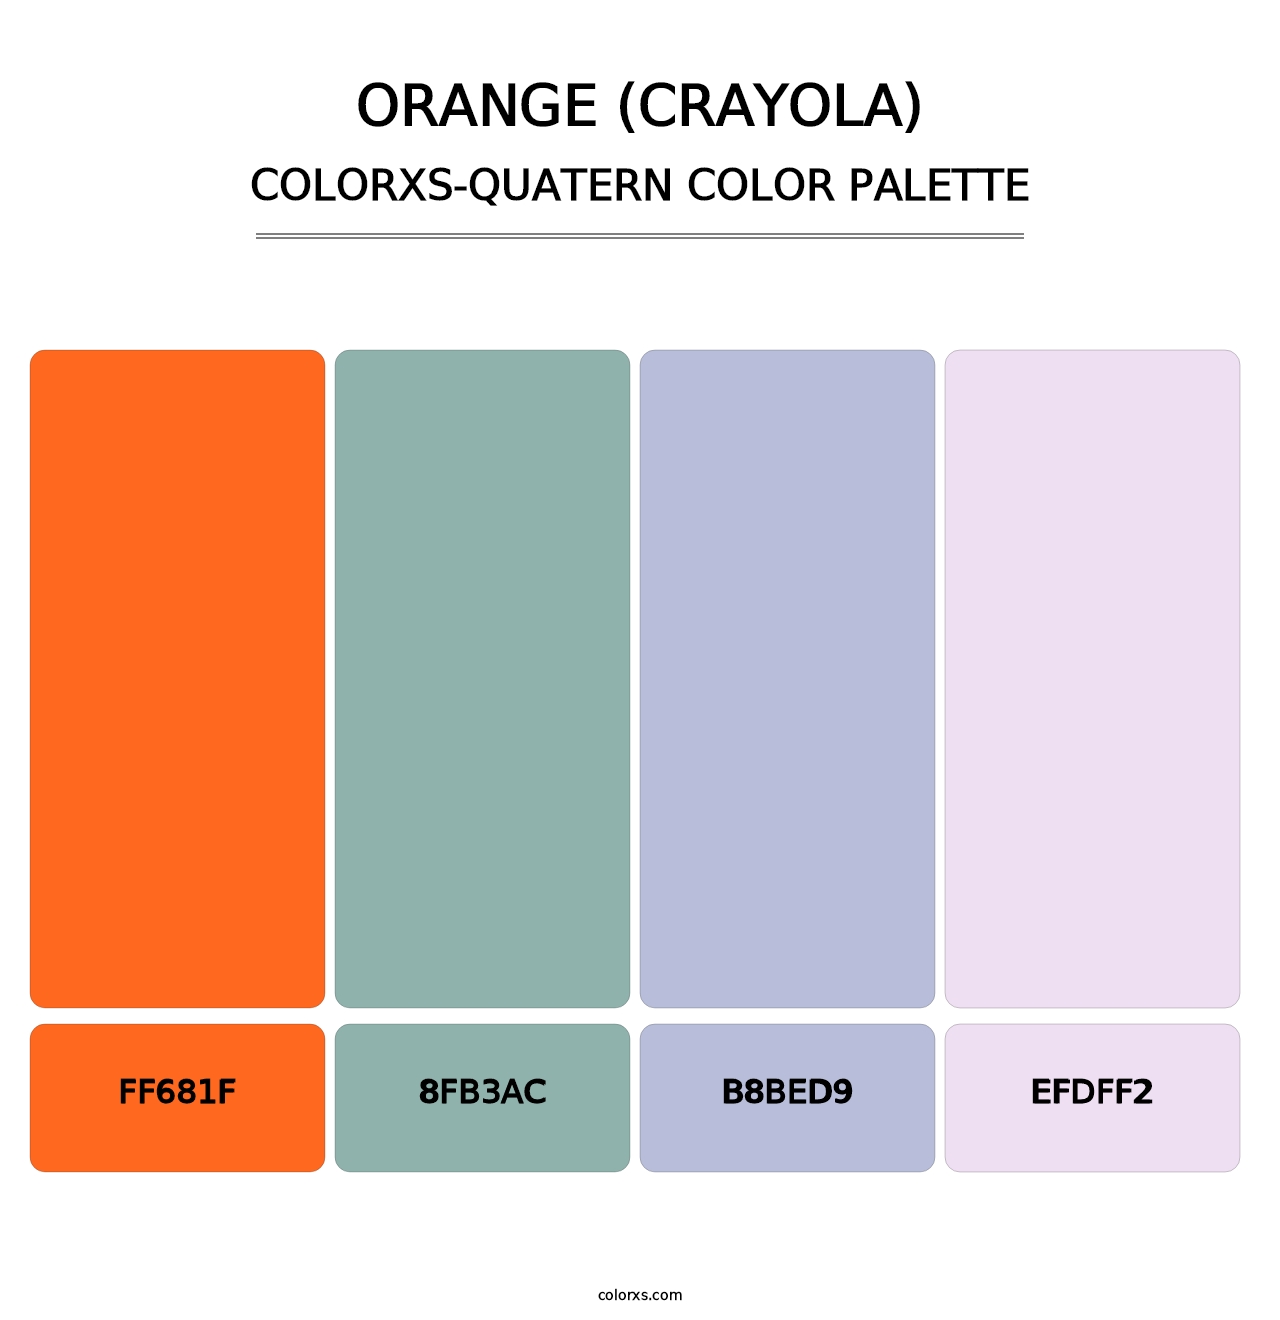 Orange (Crayola) - Colorxs Quatern Palette